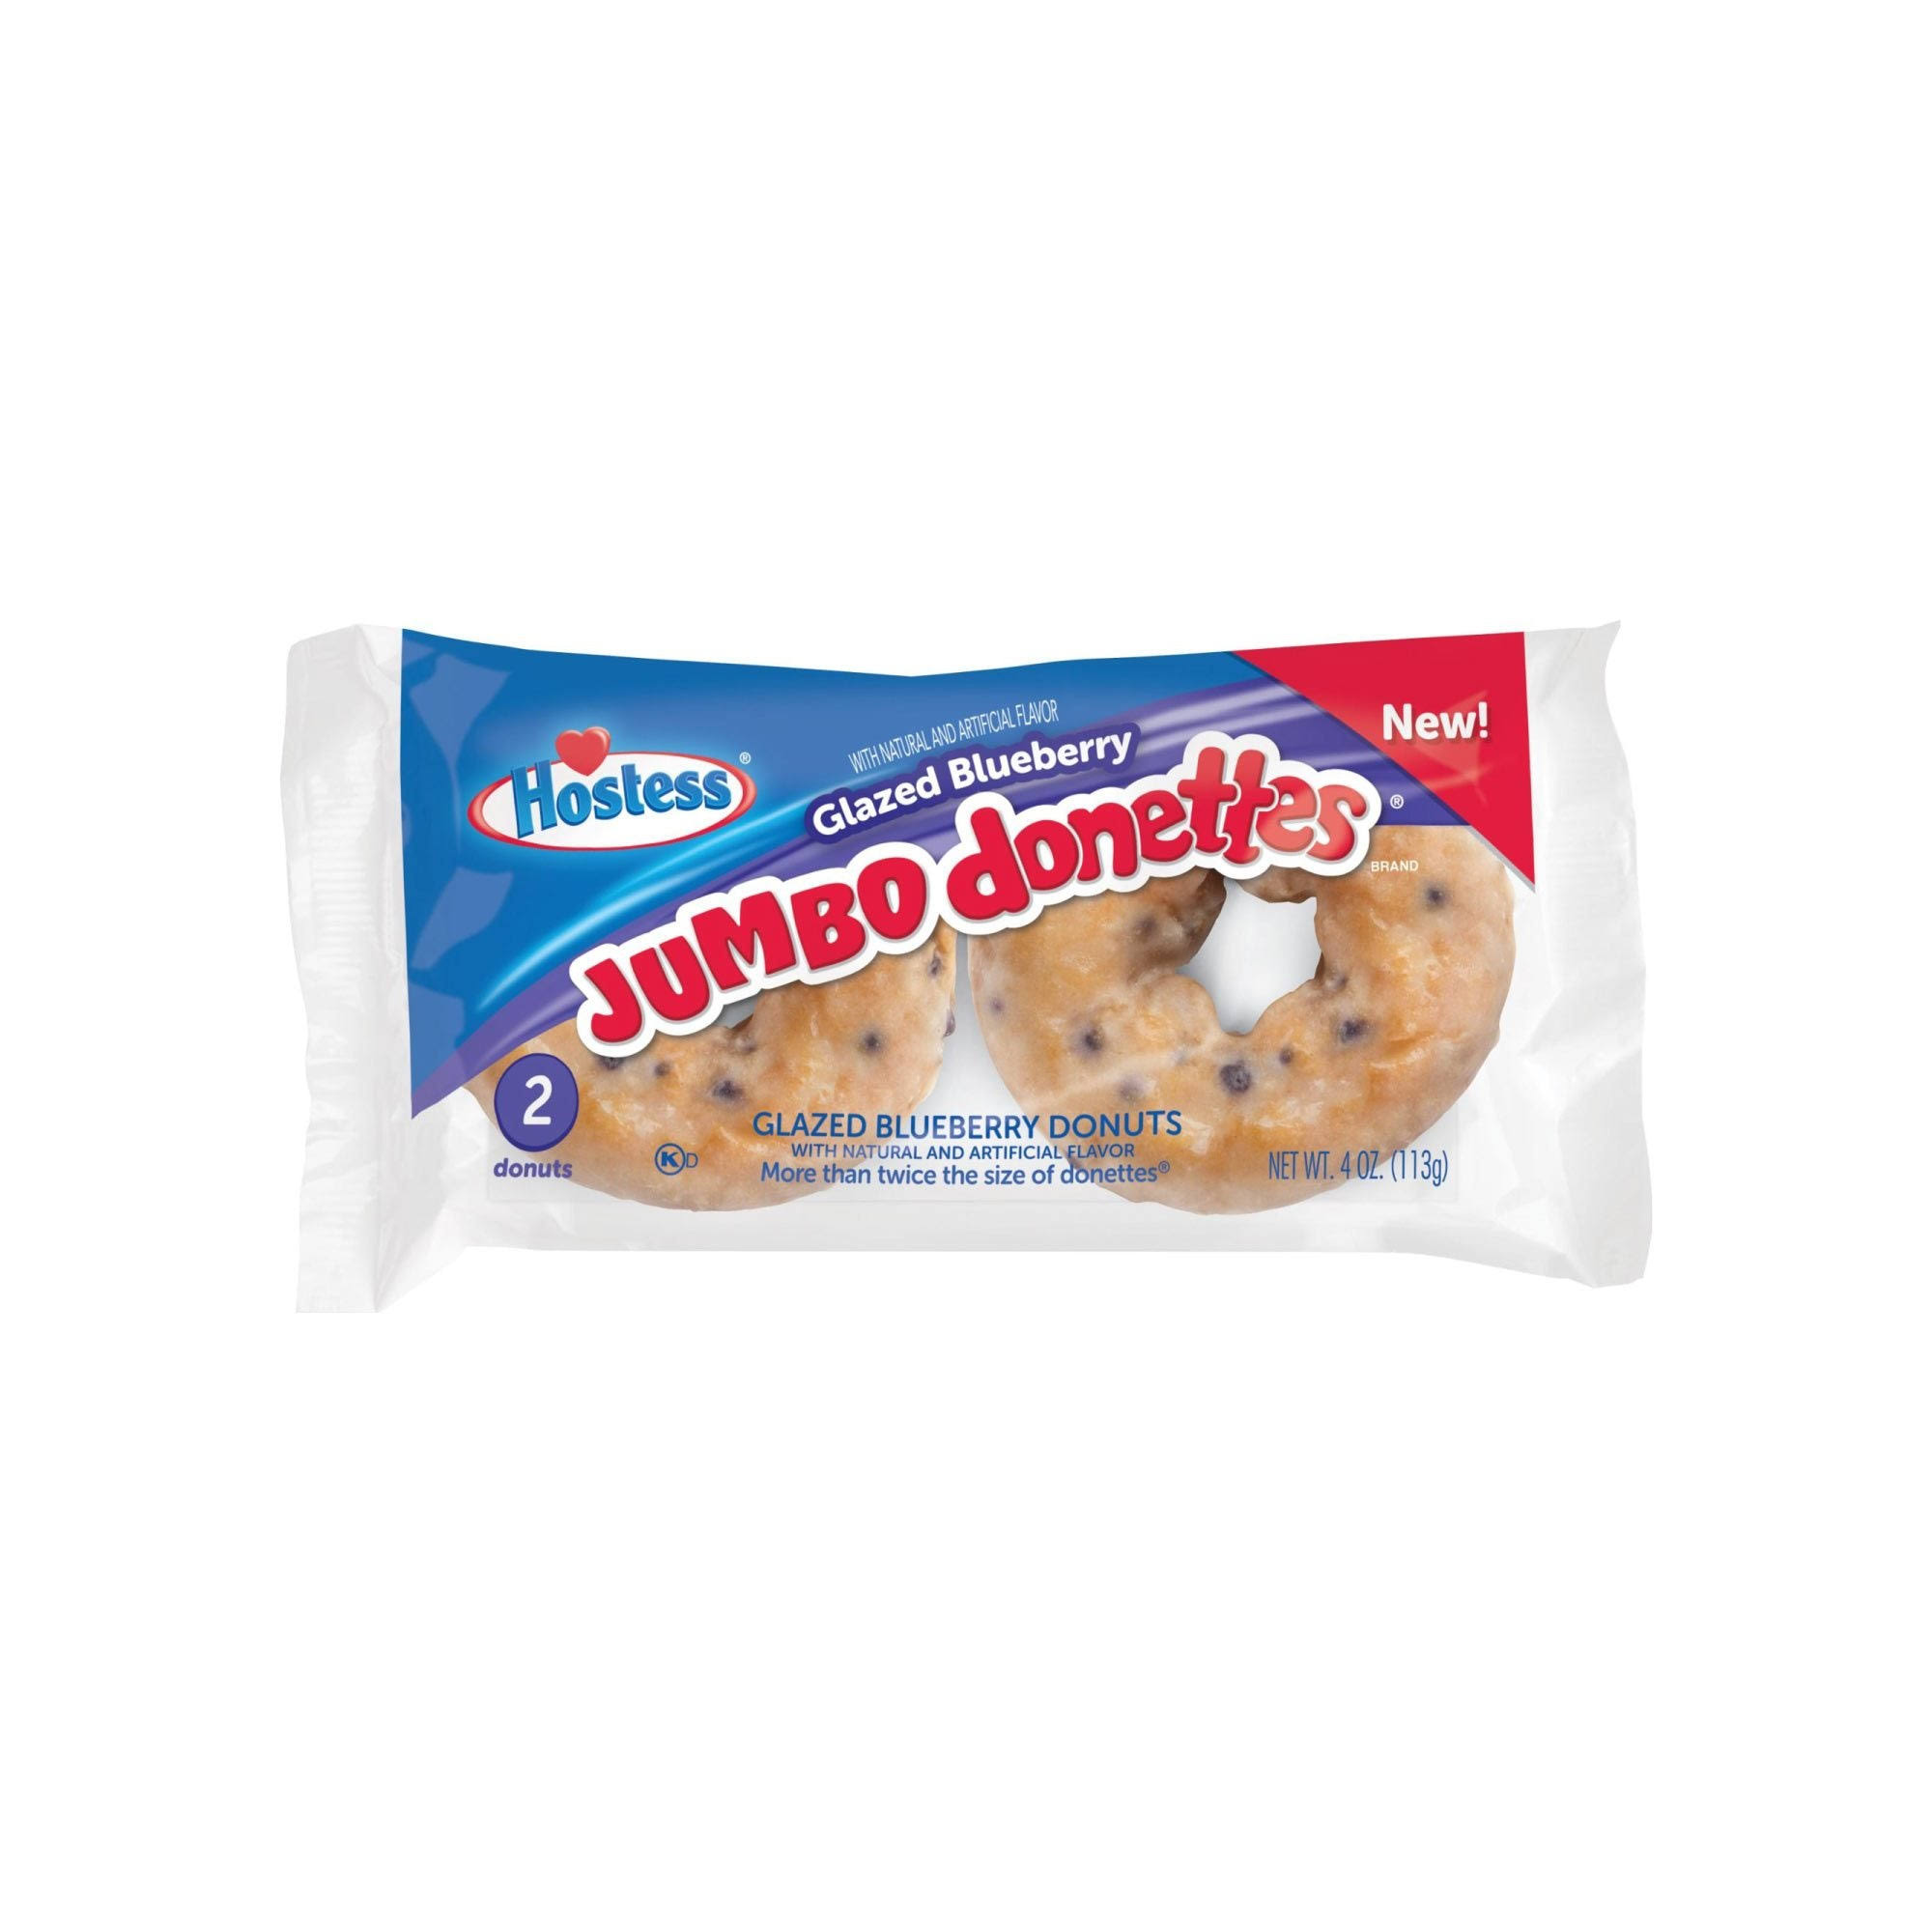 Hostess Jumbo Donettes Donuts, Glazed Blueberry - 2 donuts, 4 oz